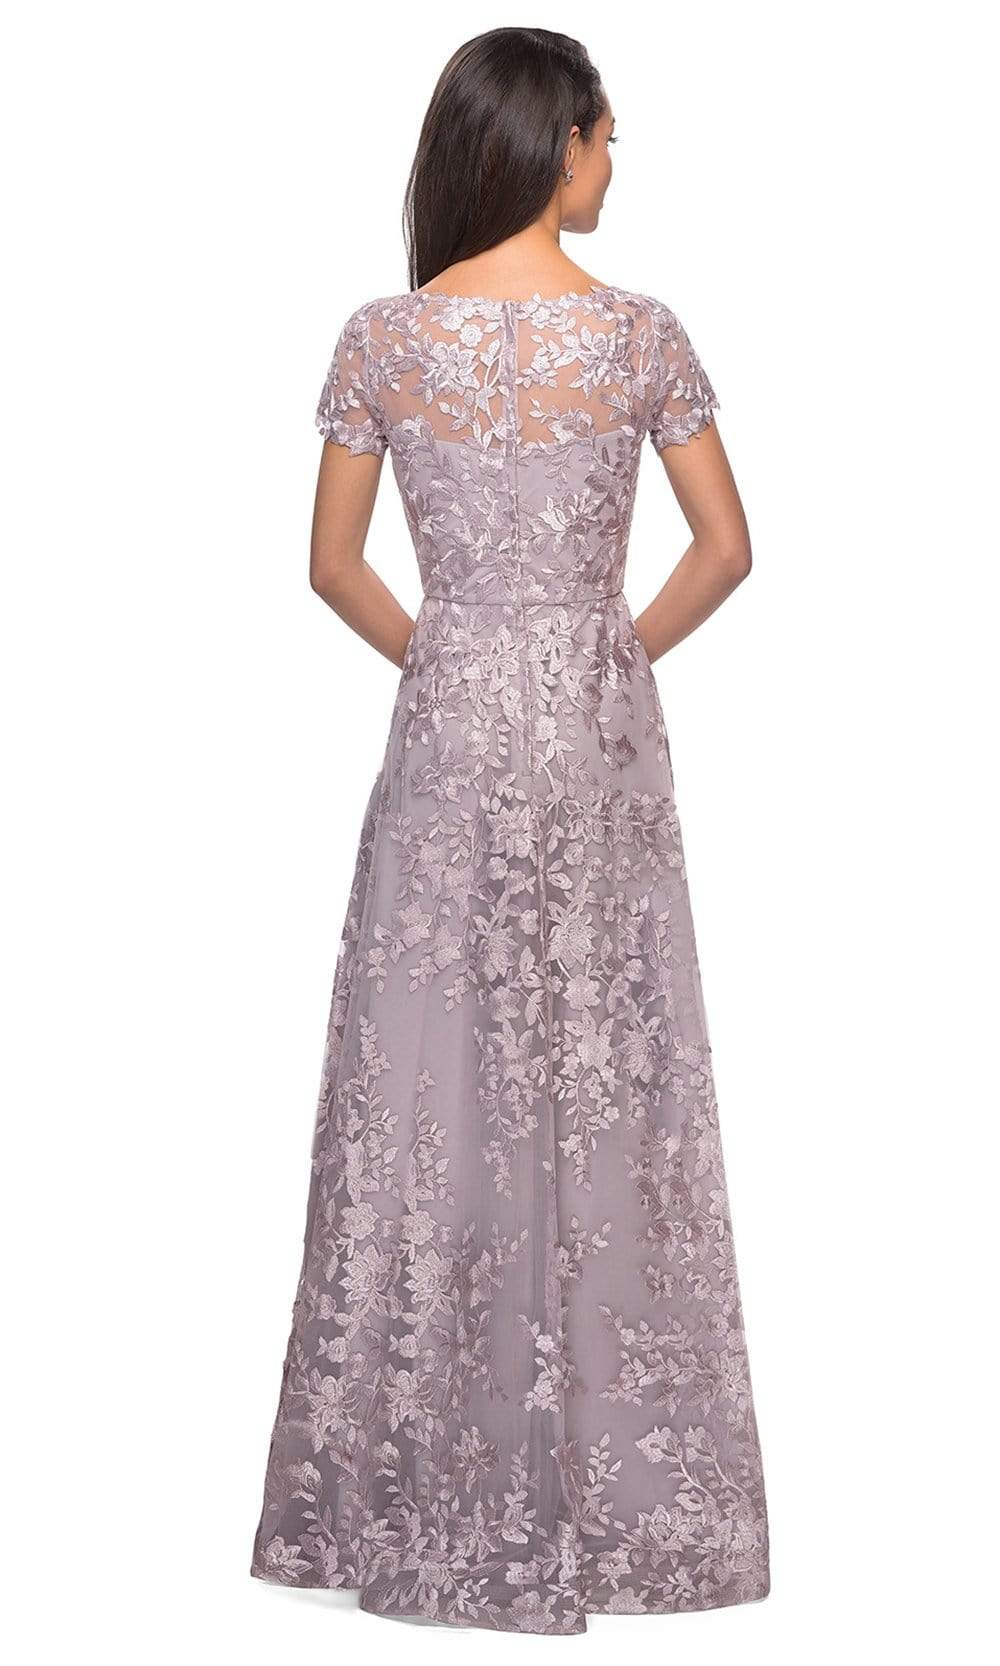 La Femme - 27870 Short Sleeve Lace Overlaid A-Line Dress Mother of the Bride Dresses